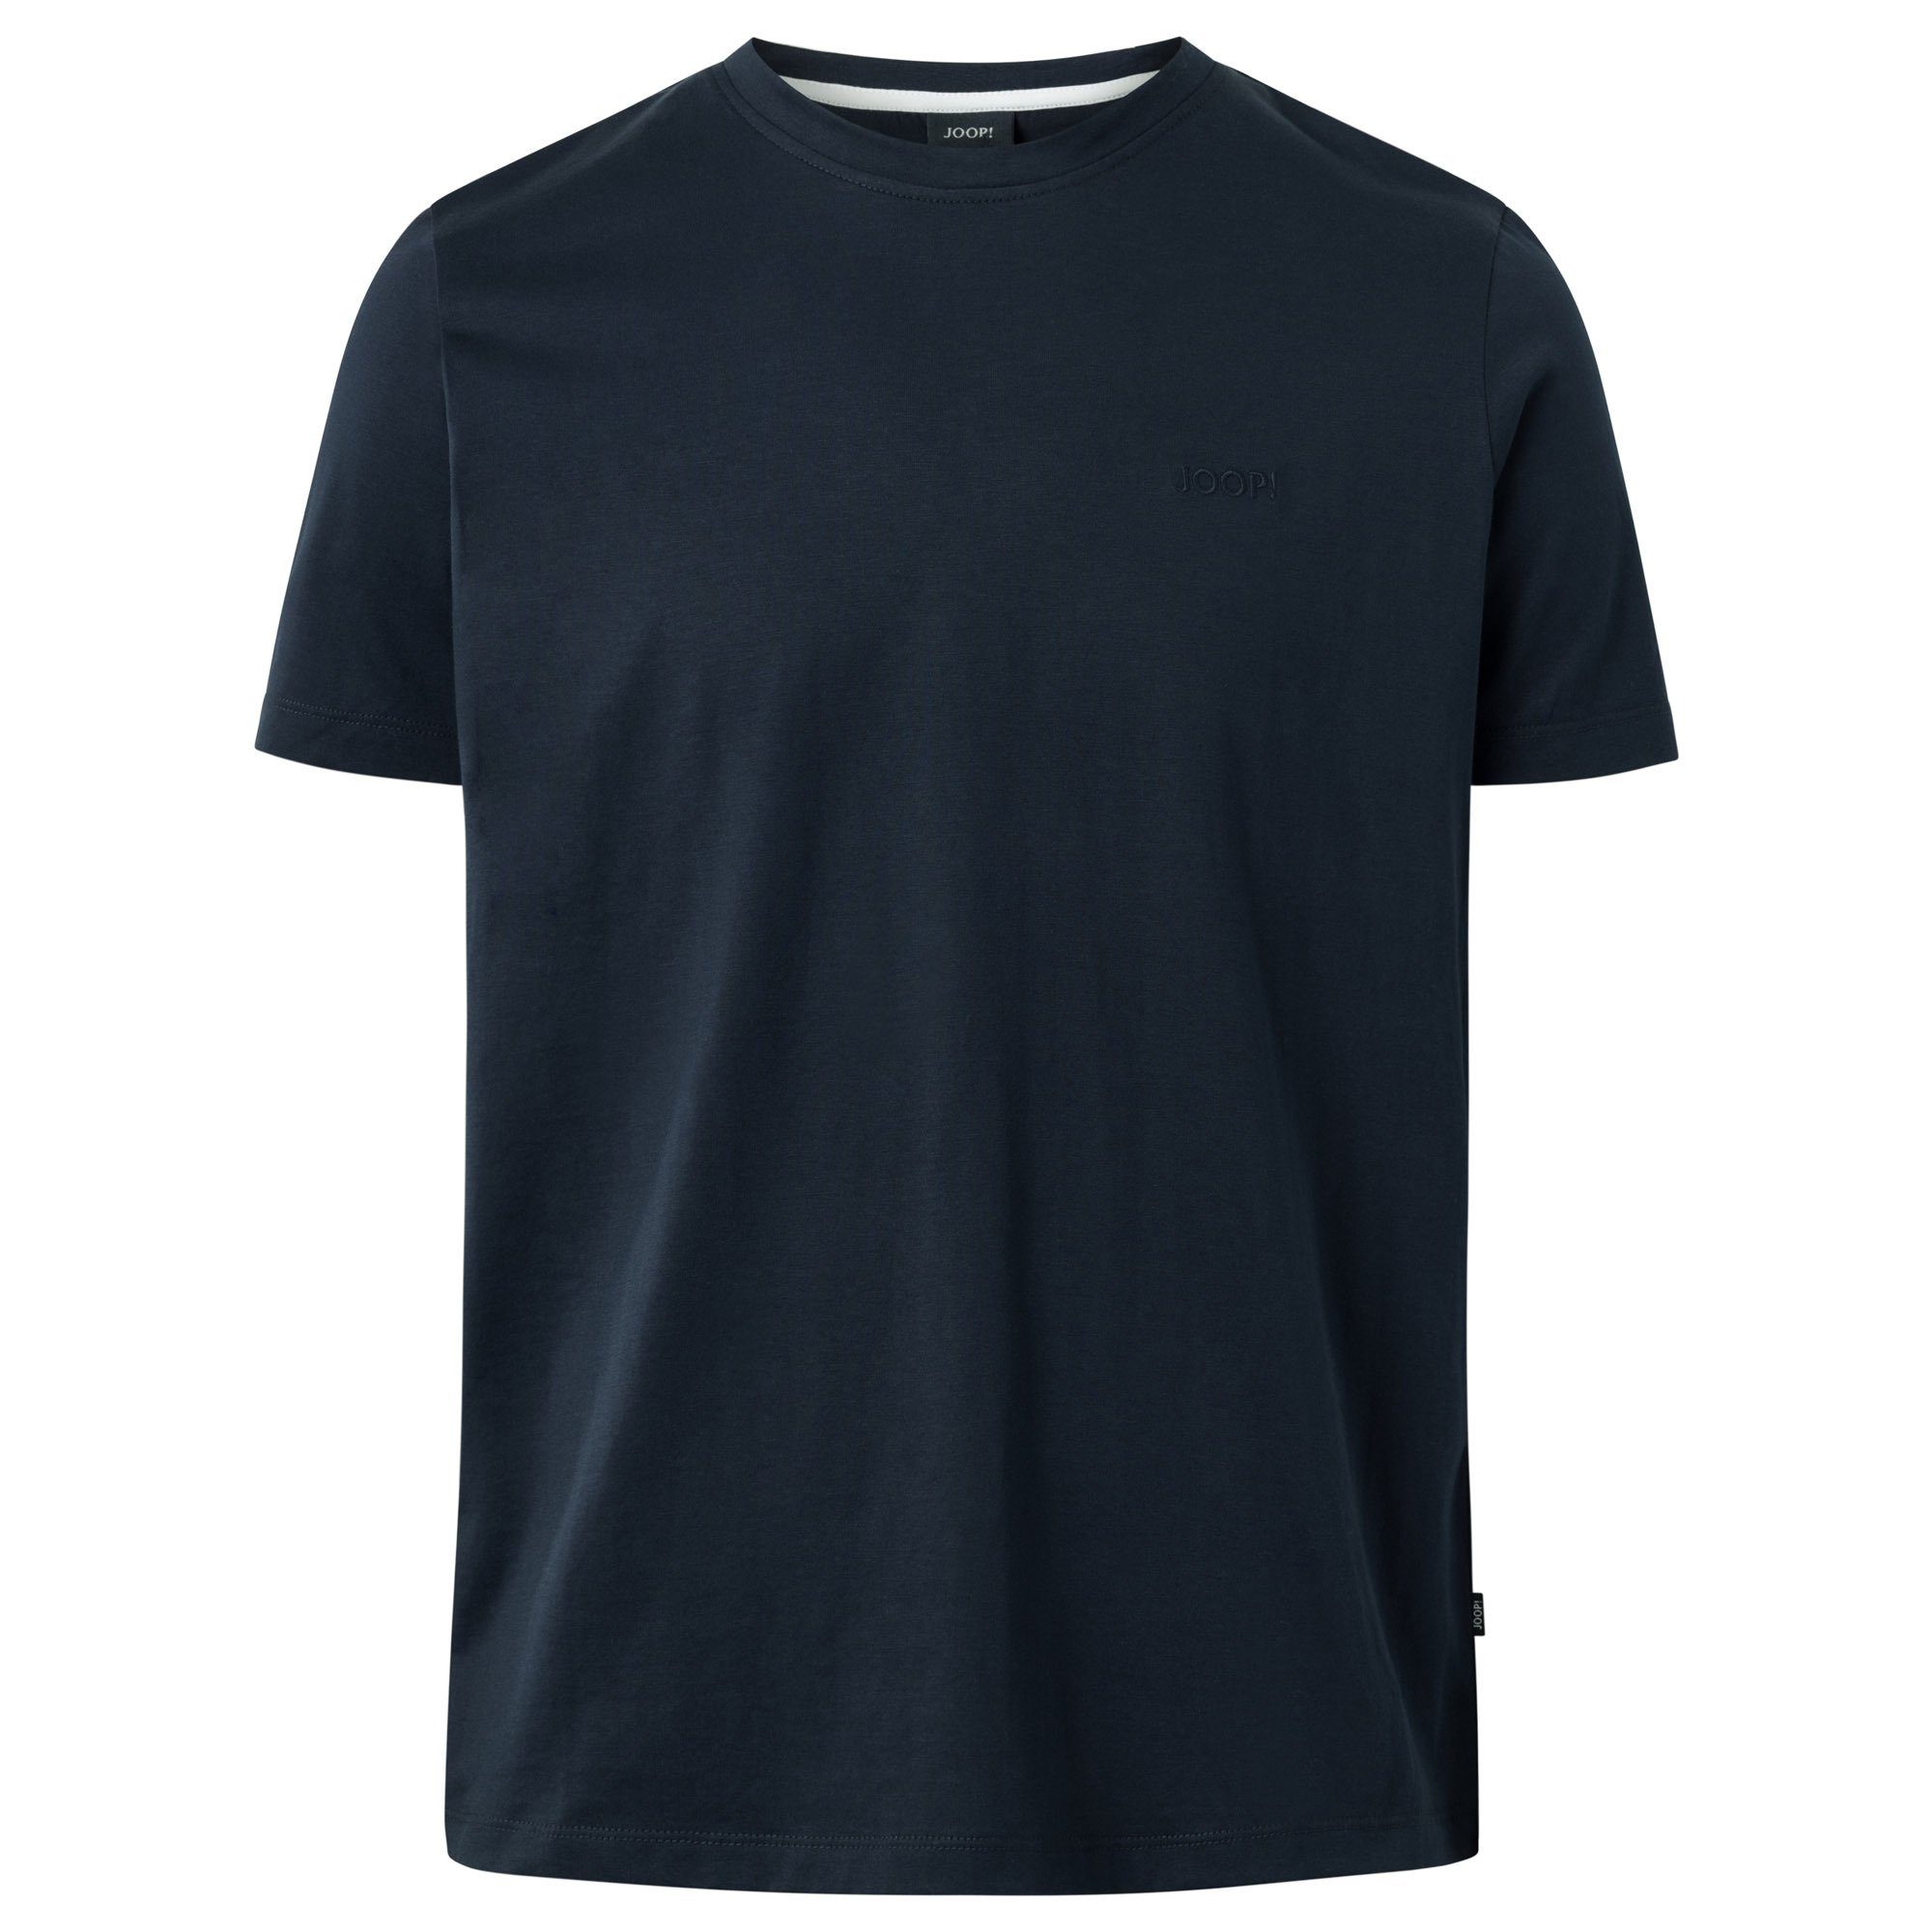 Strellson Joop! T-Shirt Herren T-Shirt - Cosimo, Rundhals, Halbarm Blau